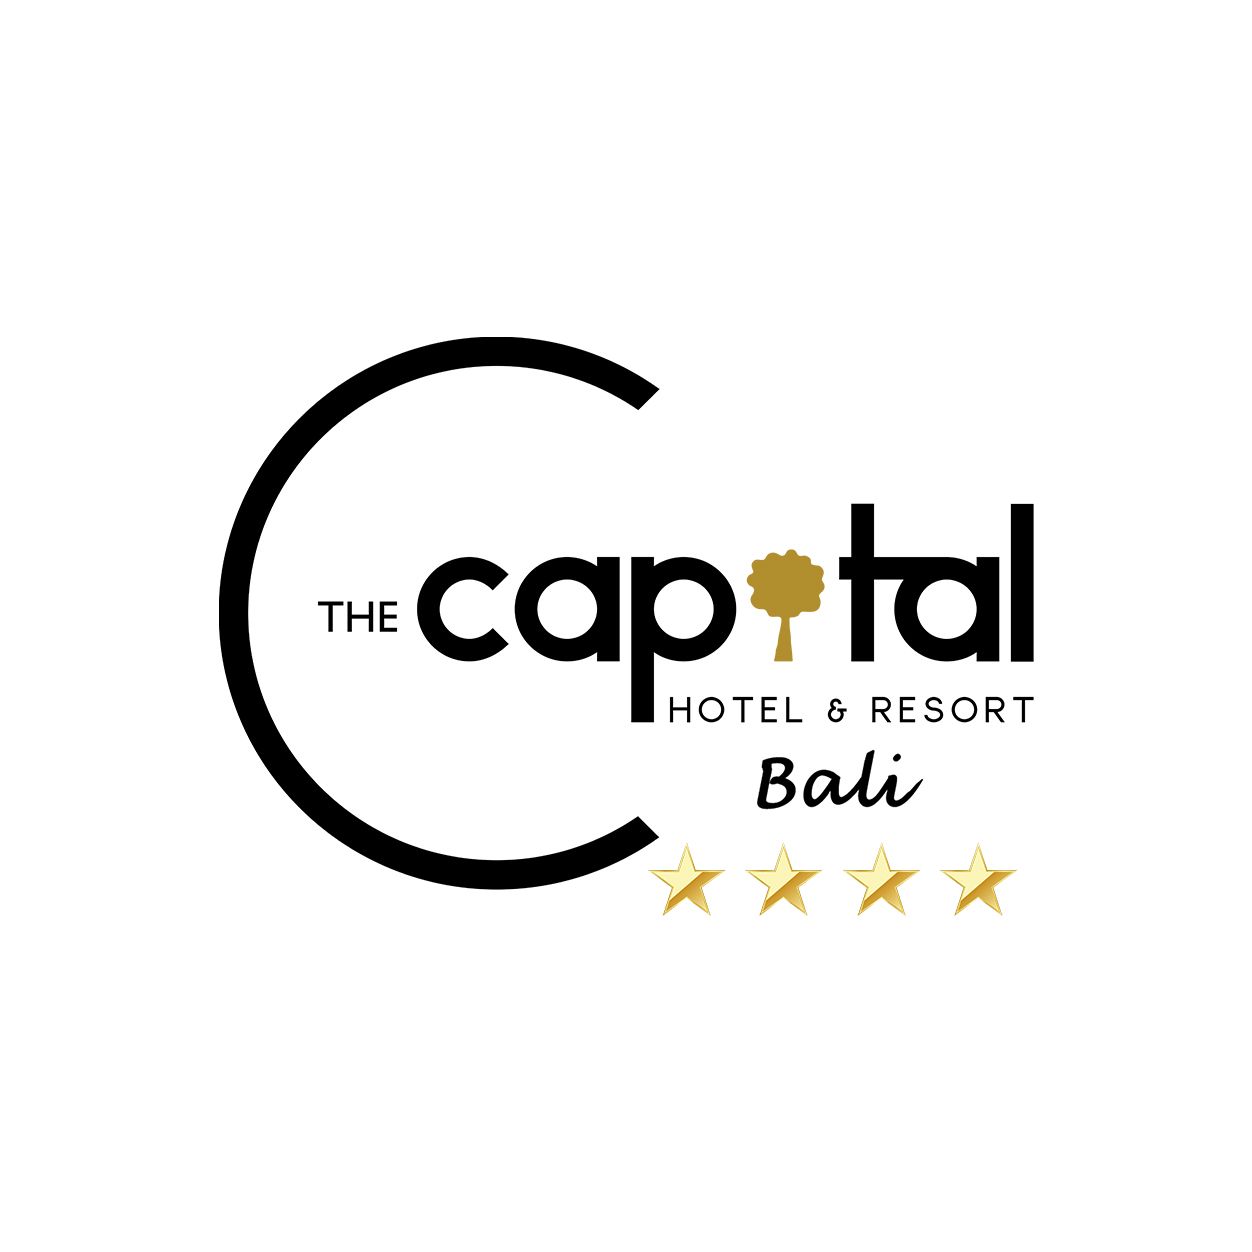 The Capital Hotel & Resort